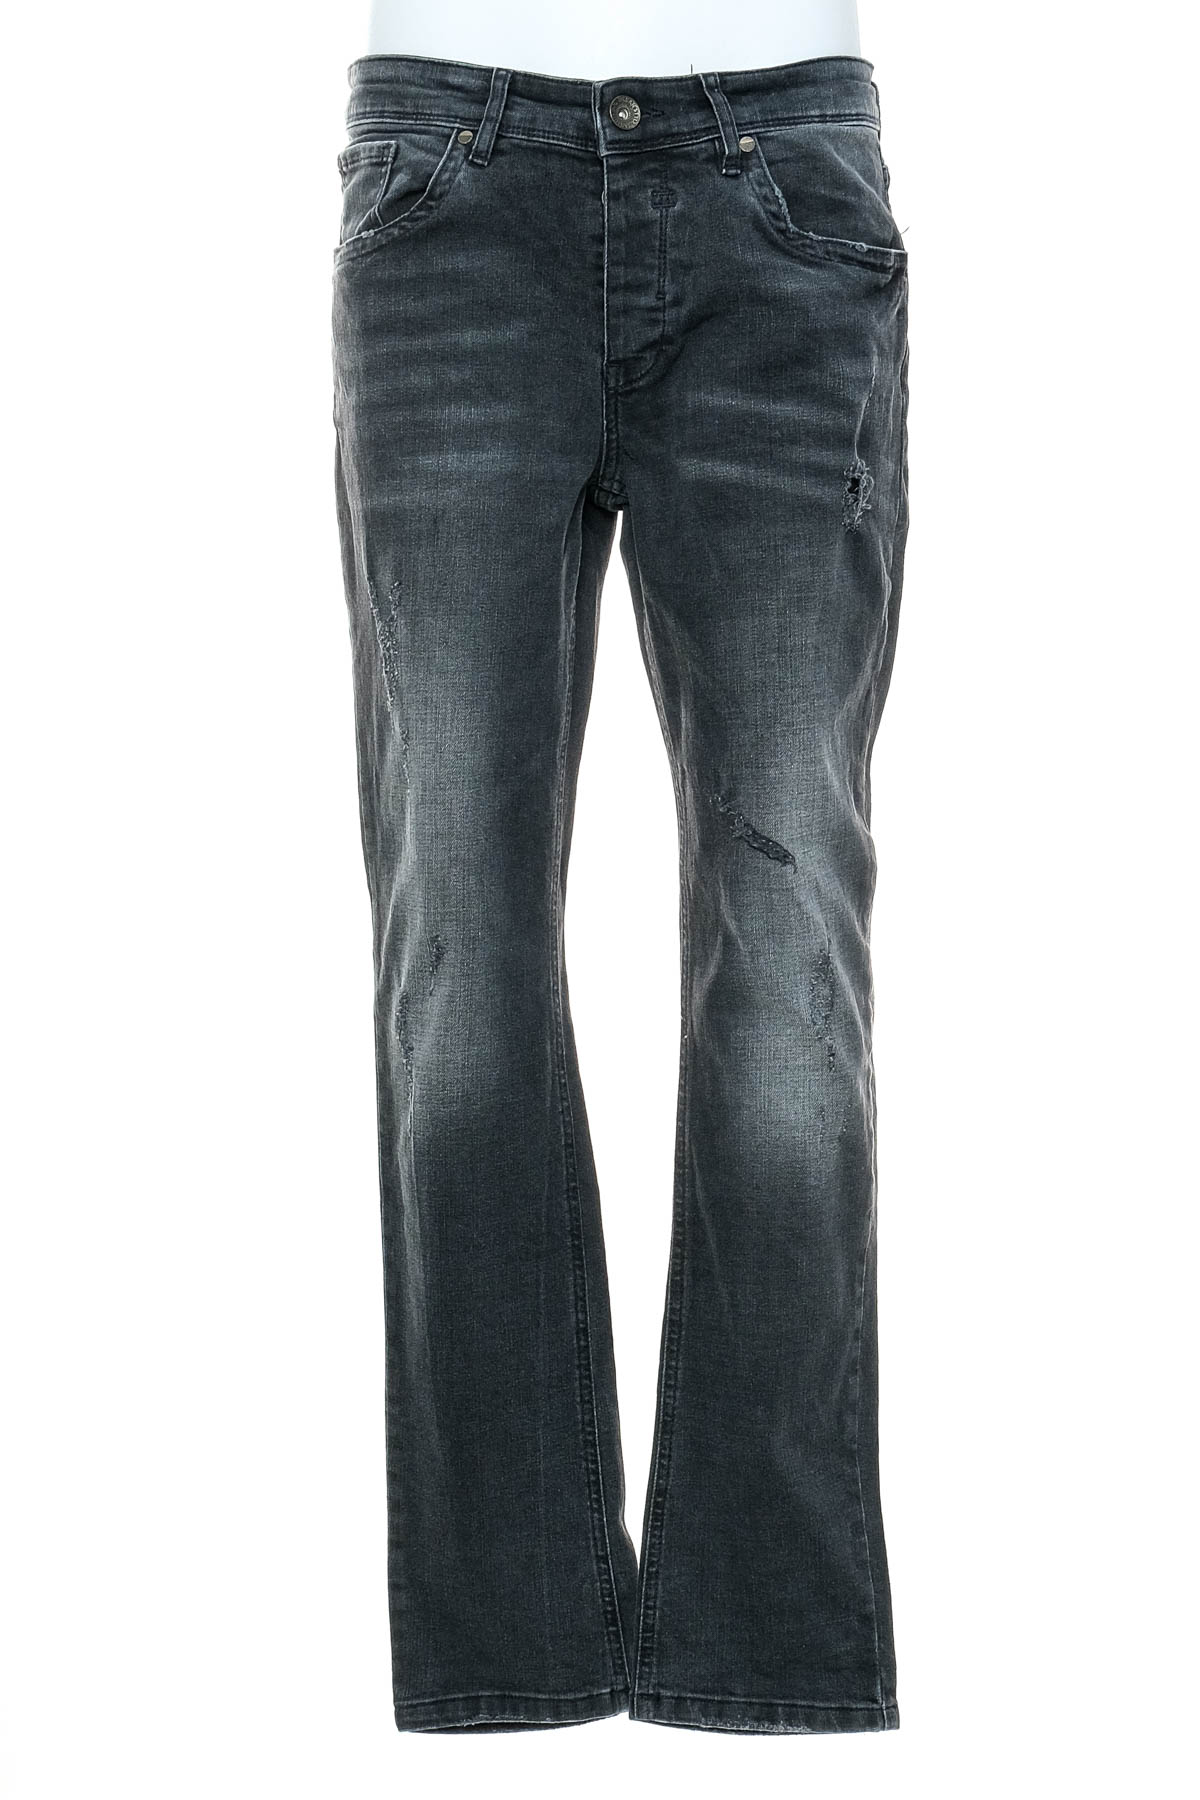 Men's jeans - Urban Style - 0